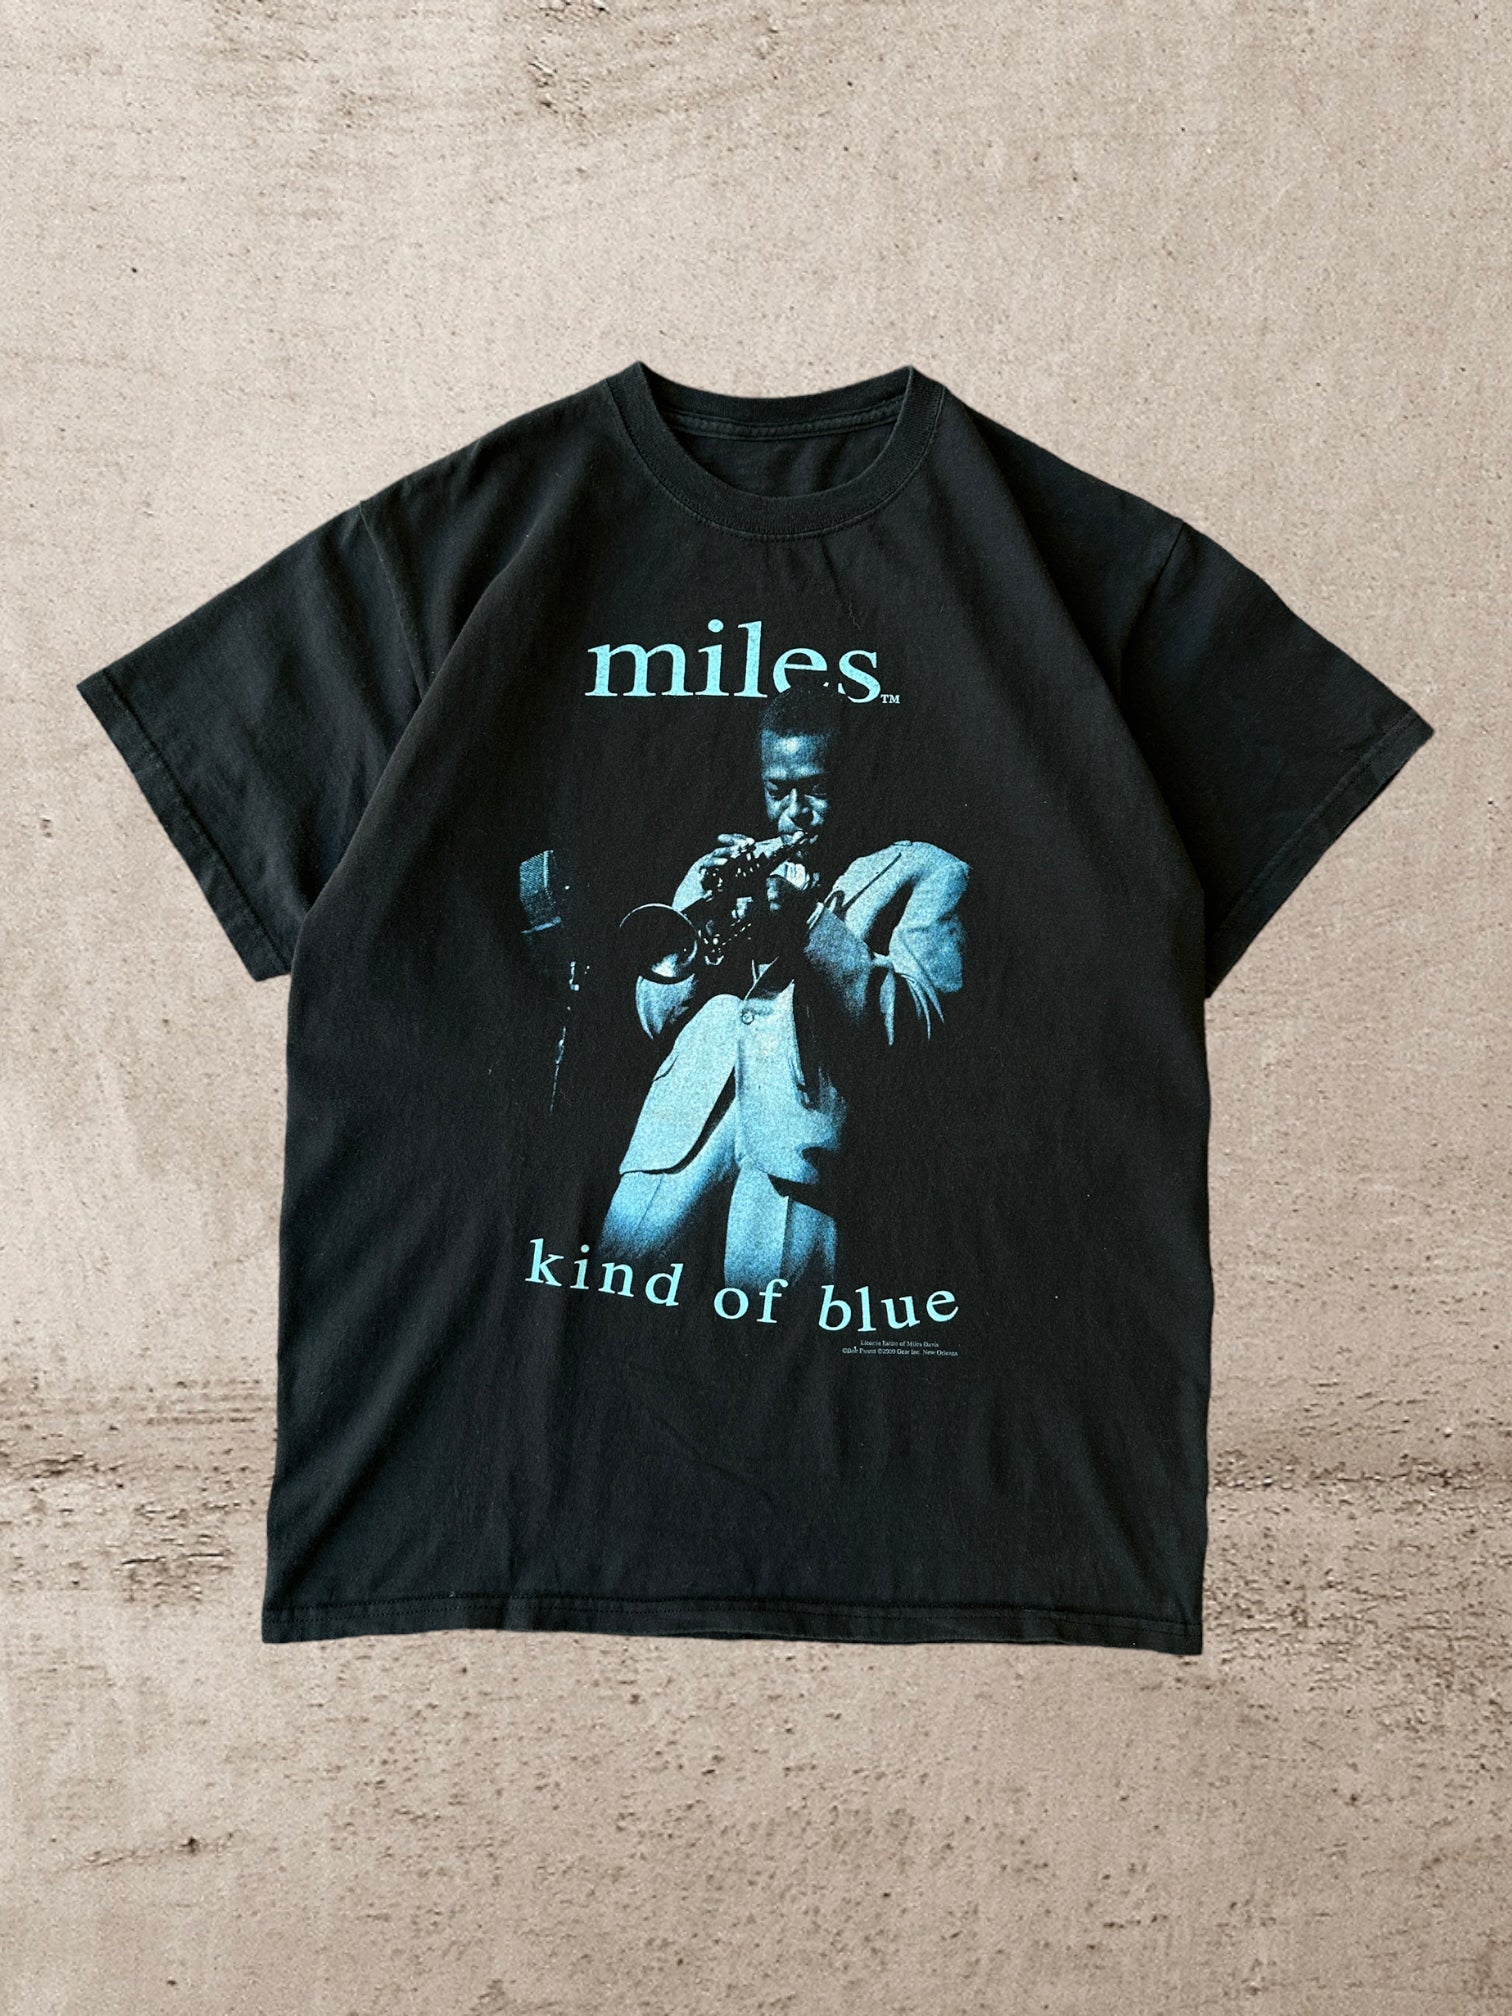 2000 Miles Davis Kind of Blue T-Shirt - Medium